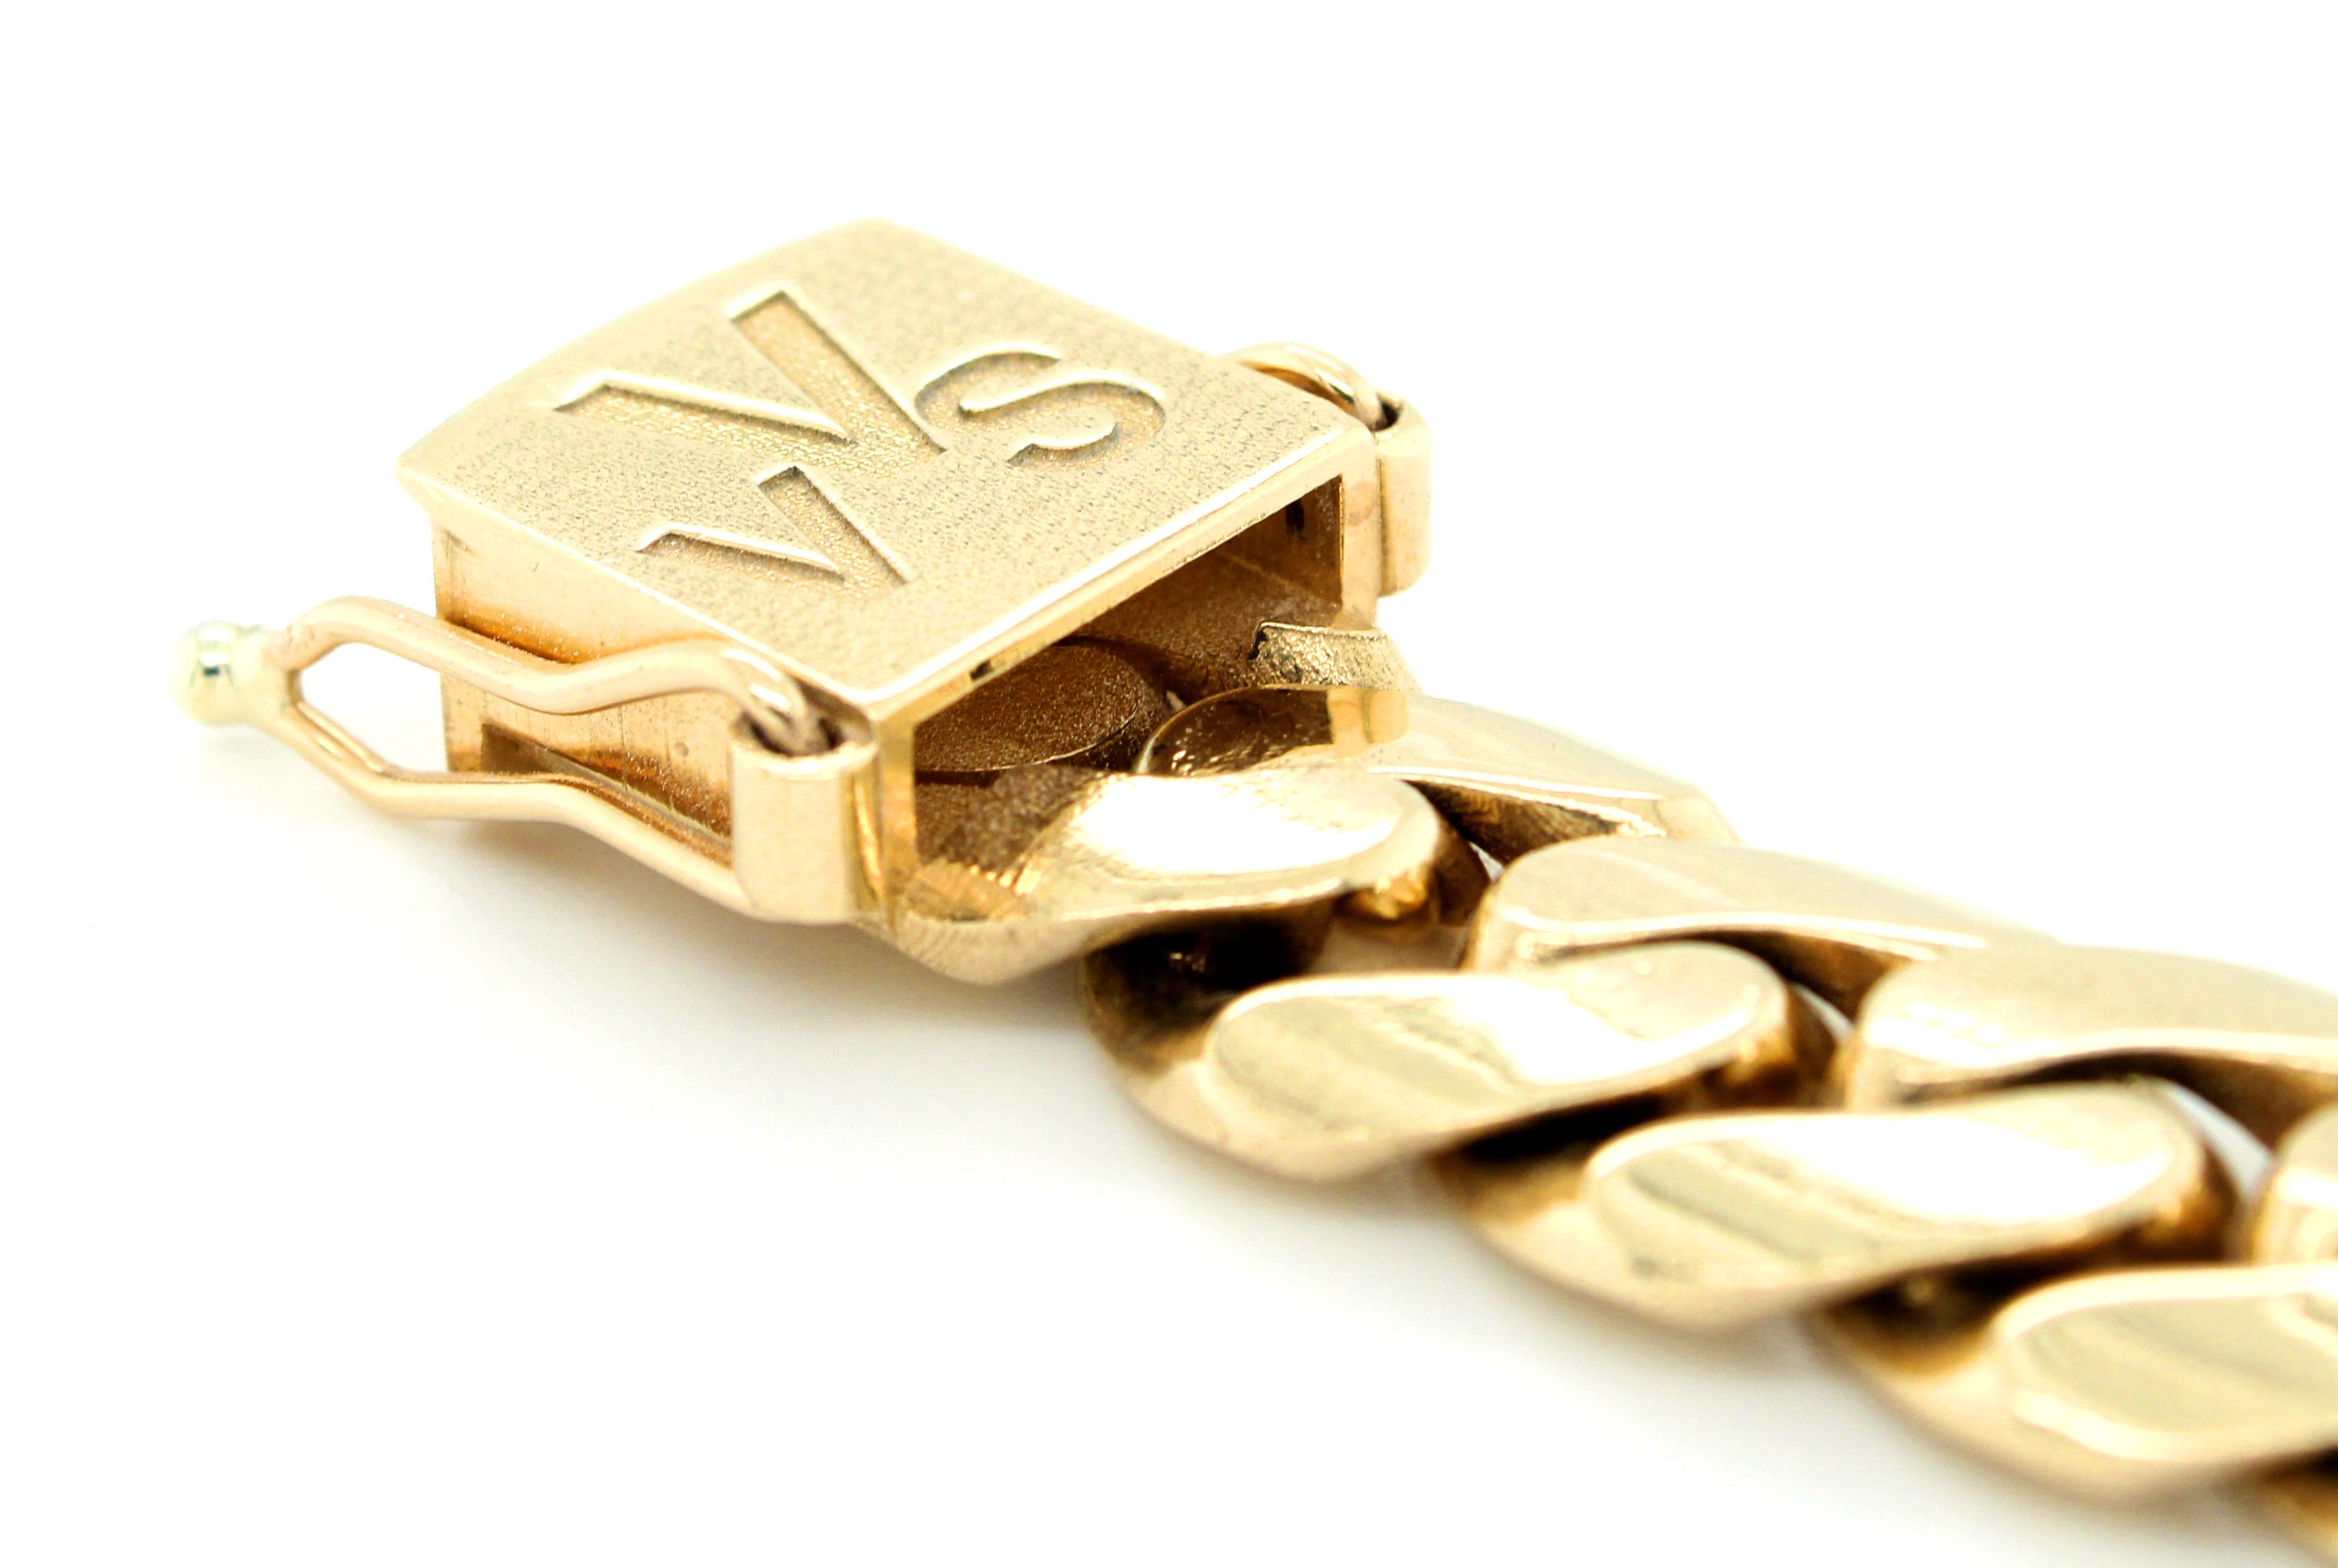 Men's Solid 10K Yellow Gold Cuban Link Chain Bracelet 8.50" | 13mm | 89.2 grams